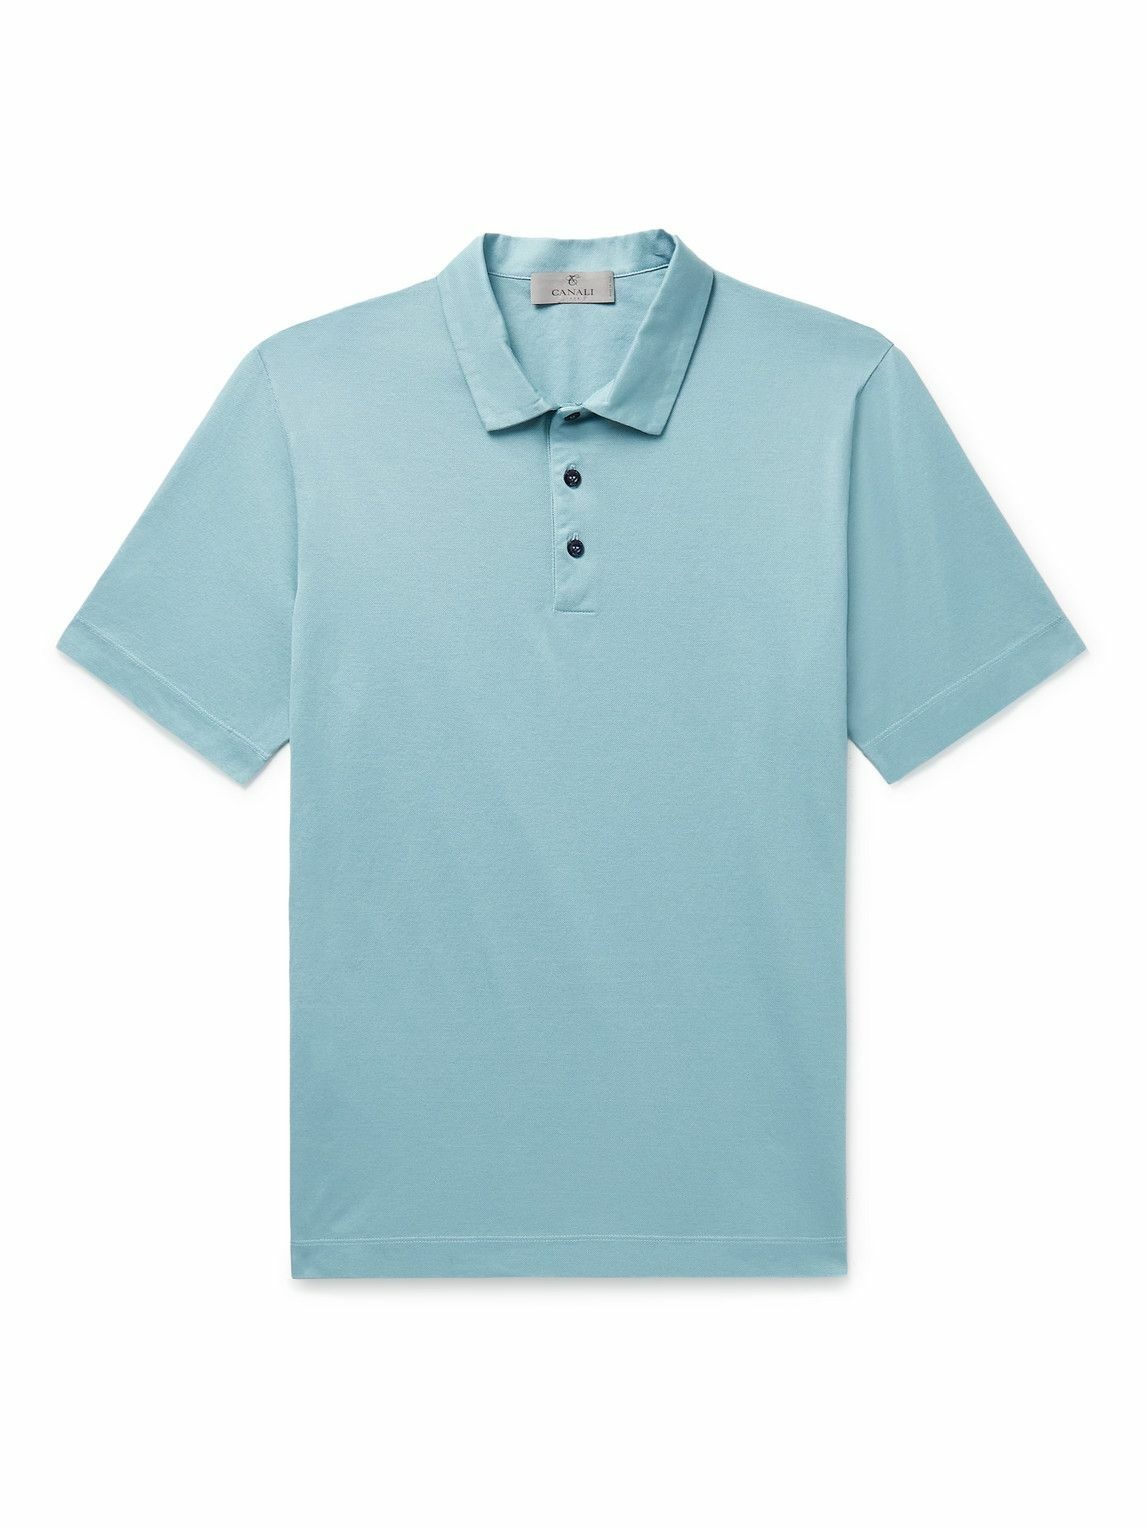 Canali - Slim-Fit Cotton-Piqué Polo Shirt - Blue Canali